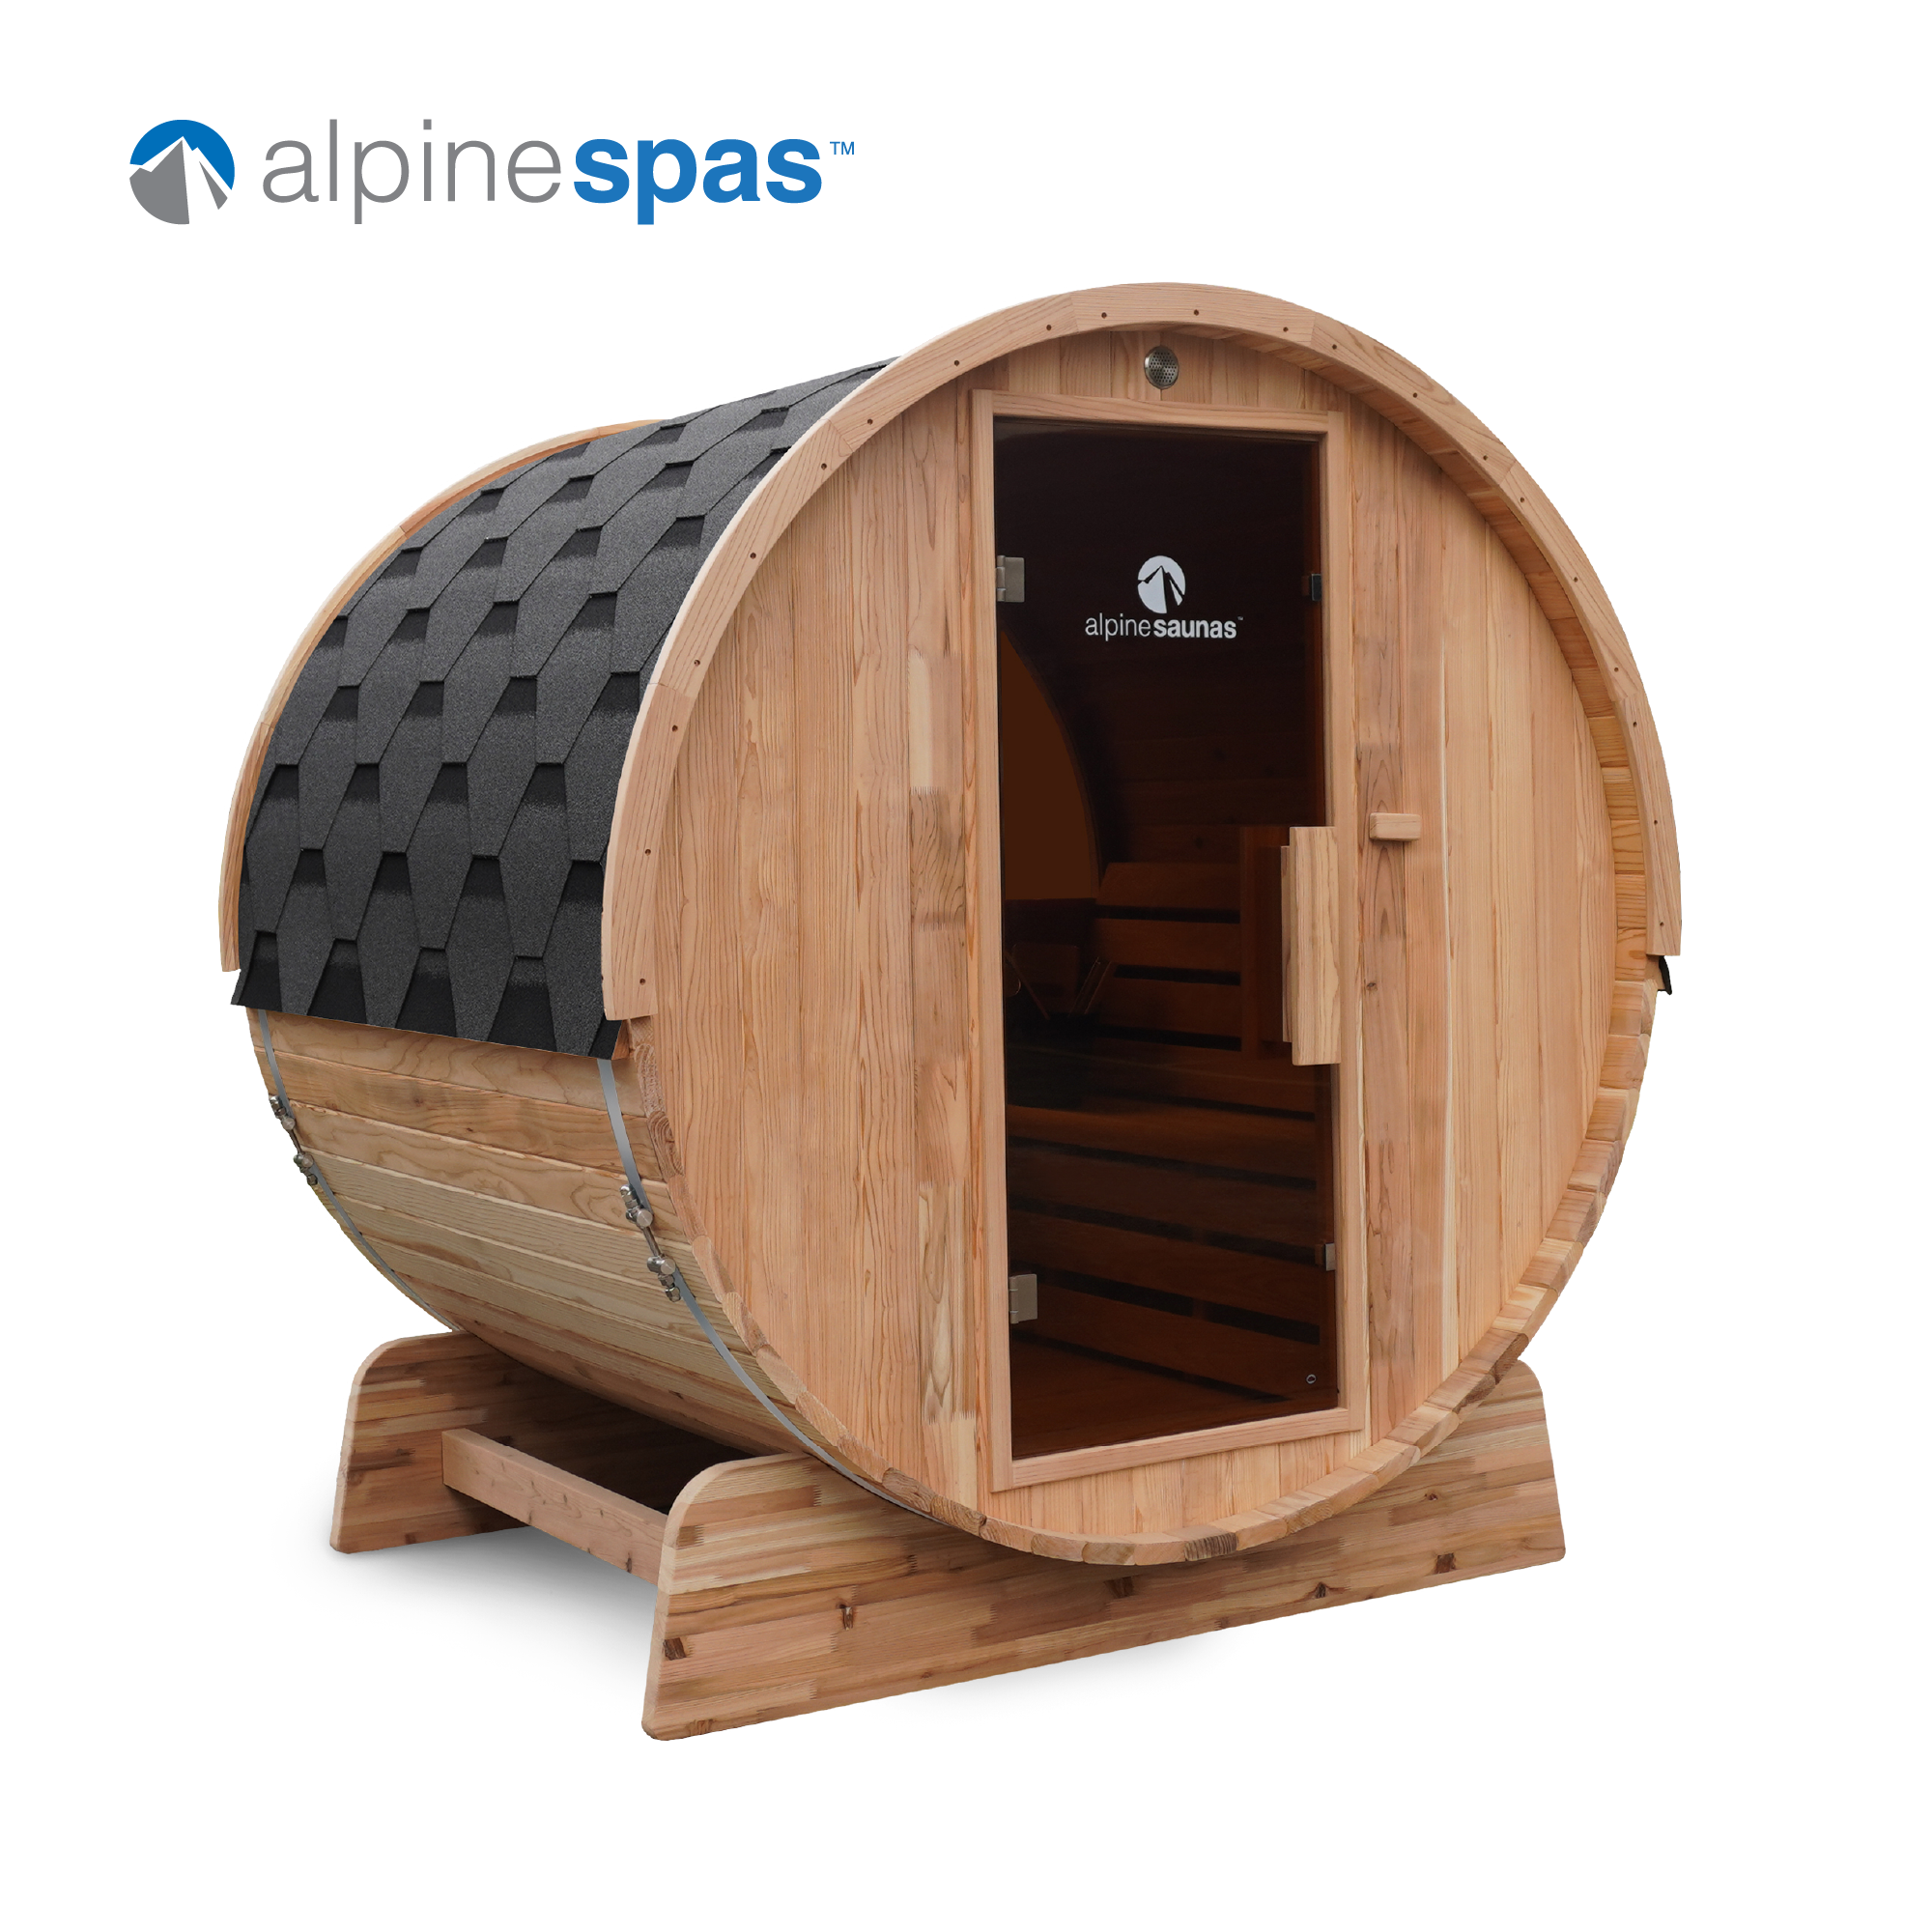 Alpinespas Image - CLick to view website